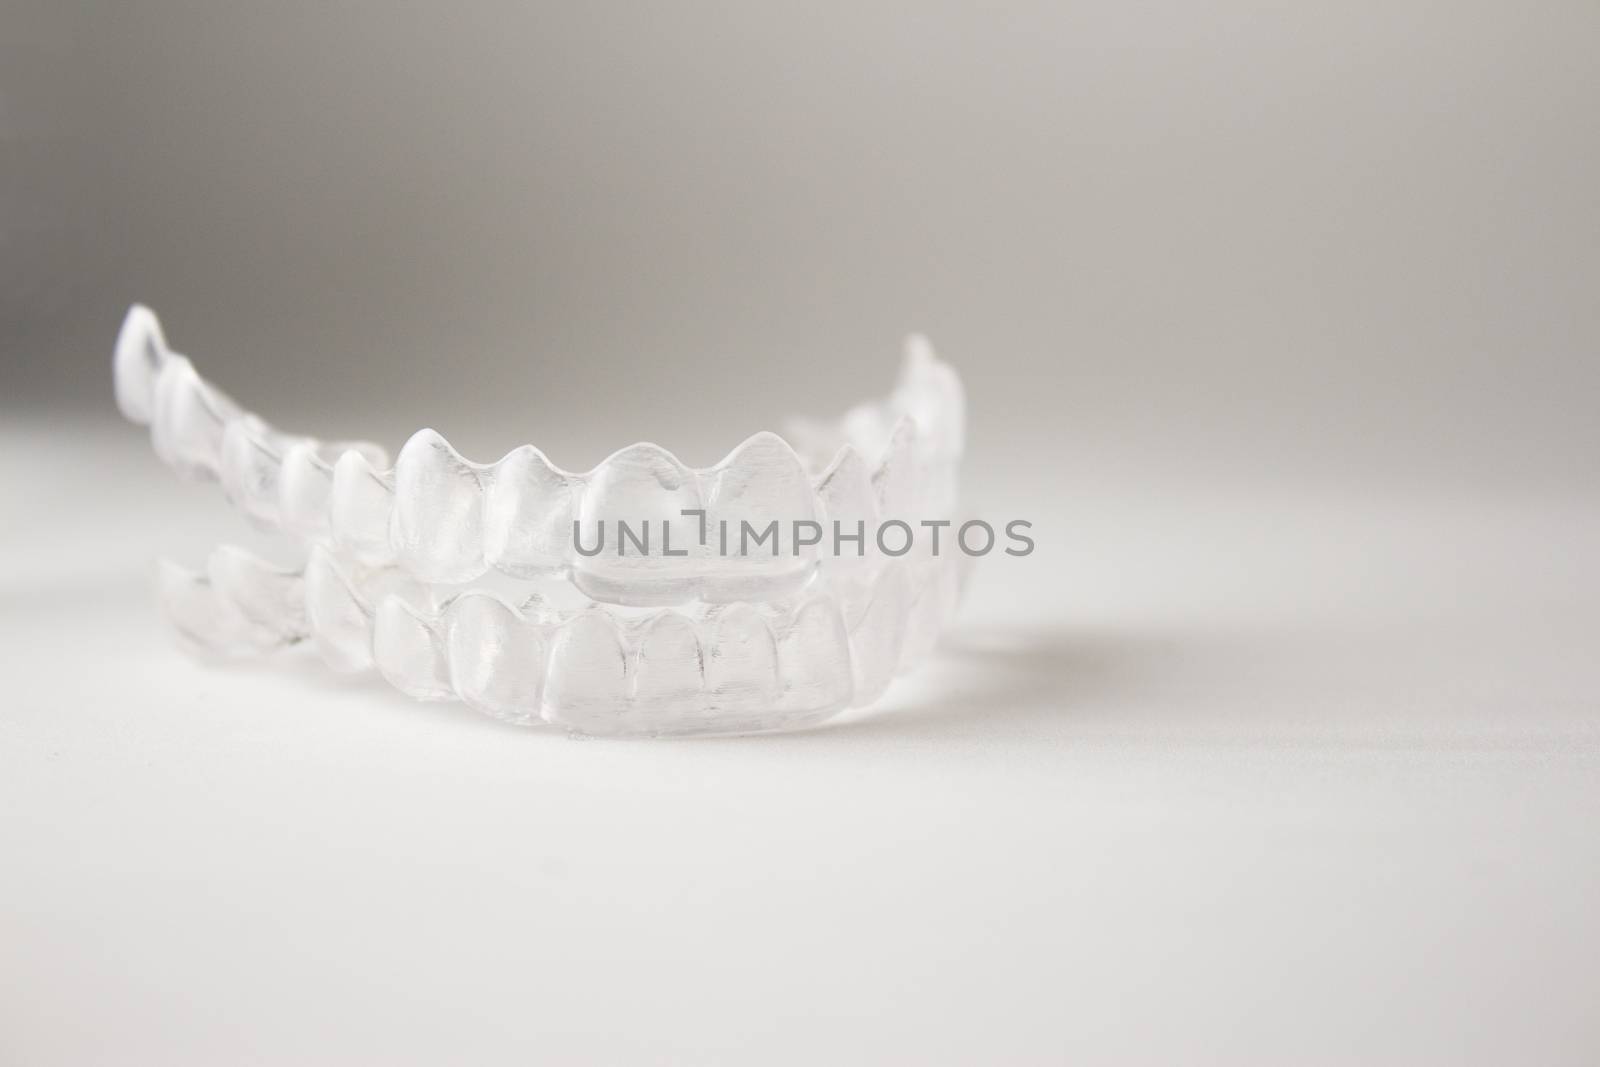 Postural plastic denture teeth correction.